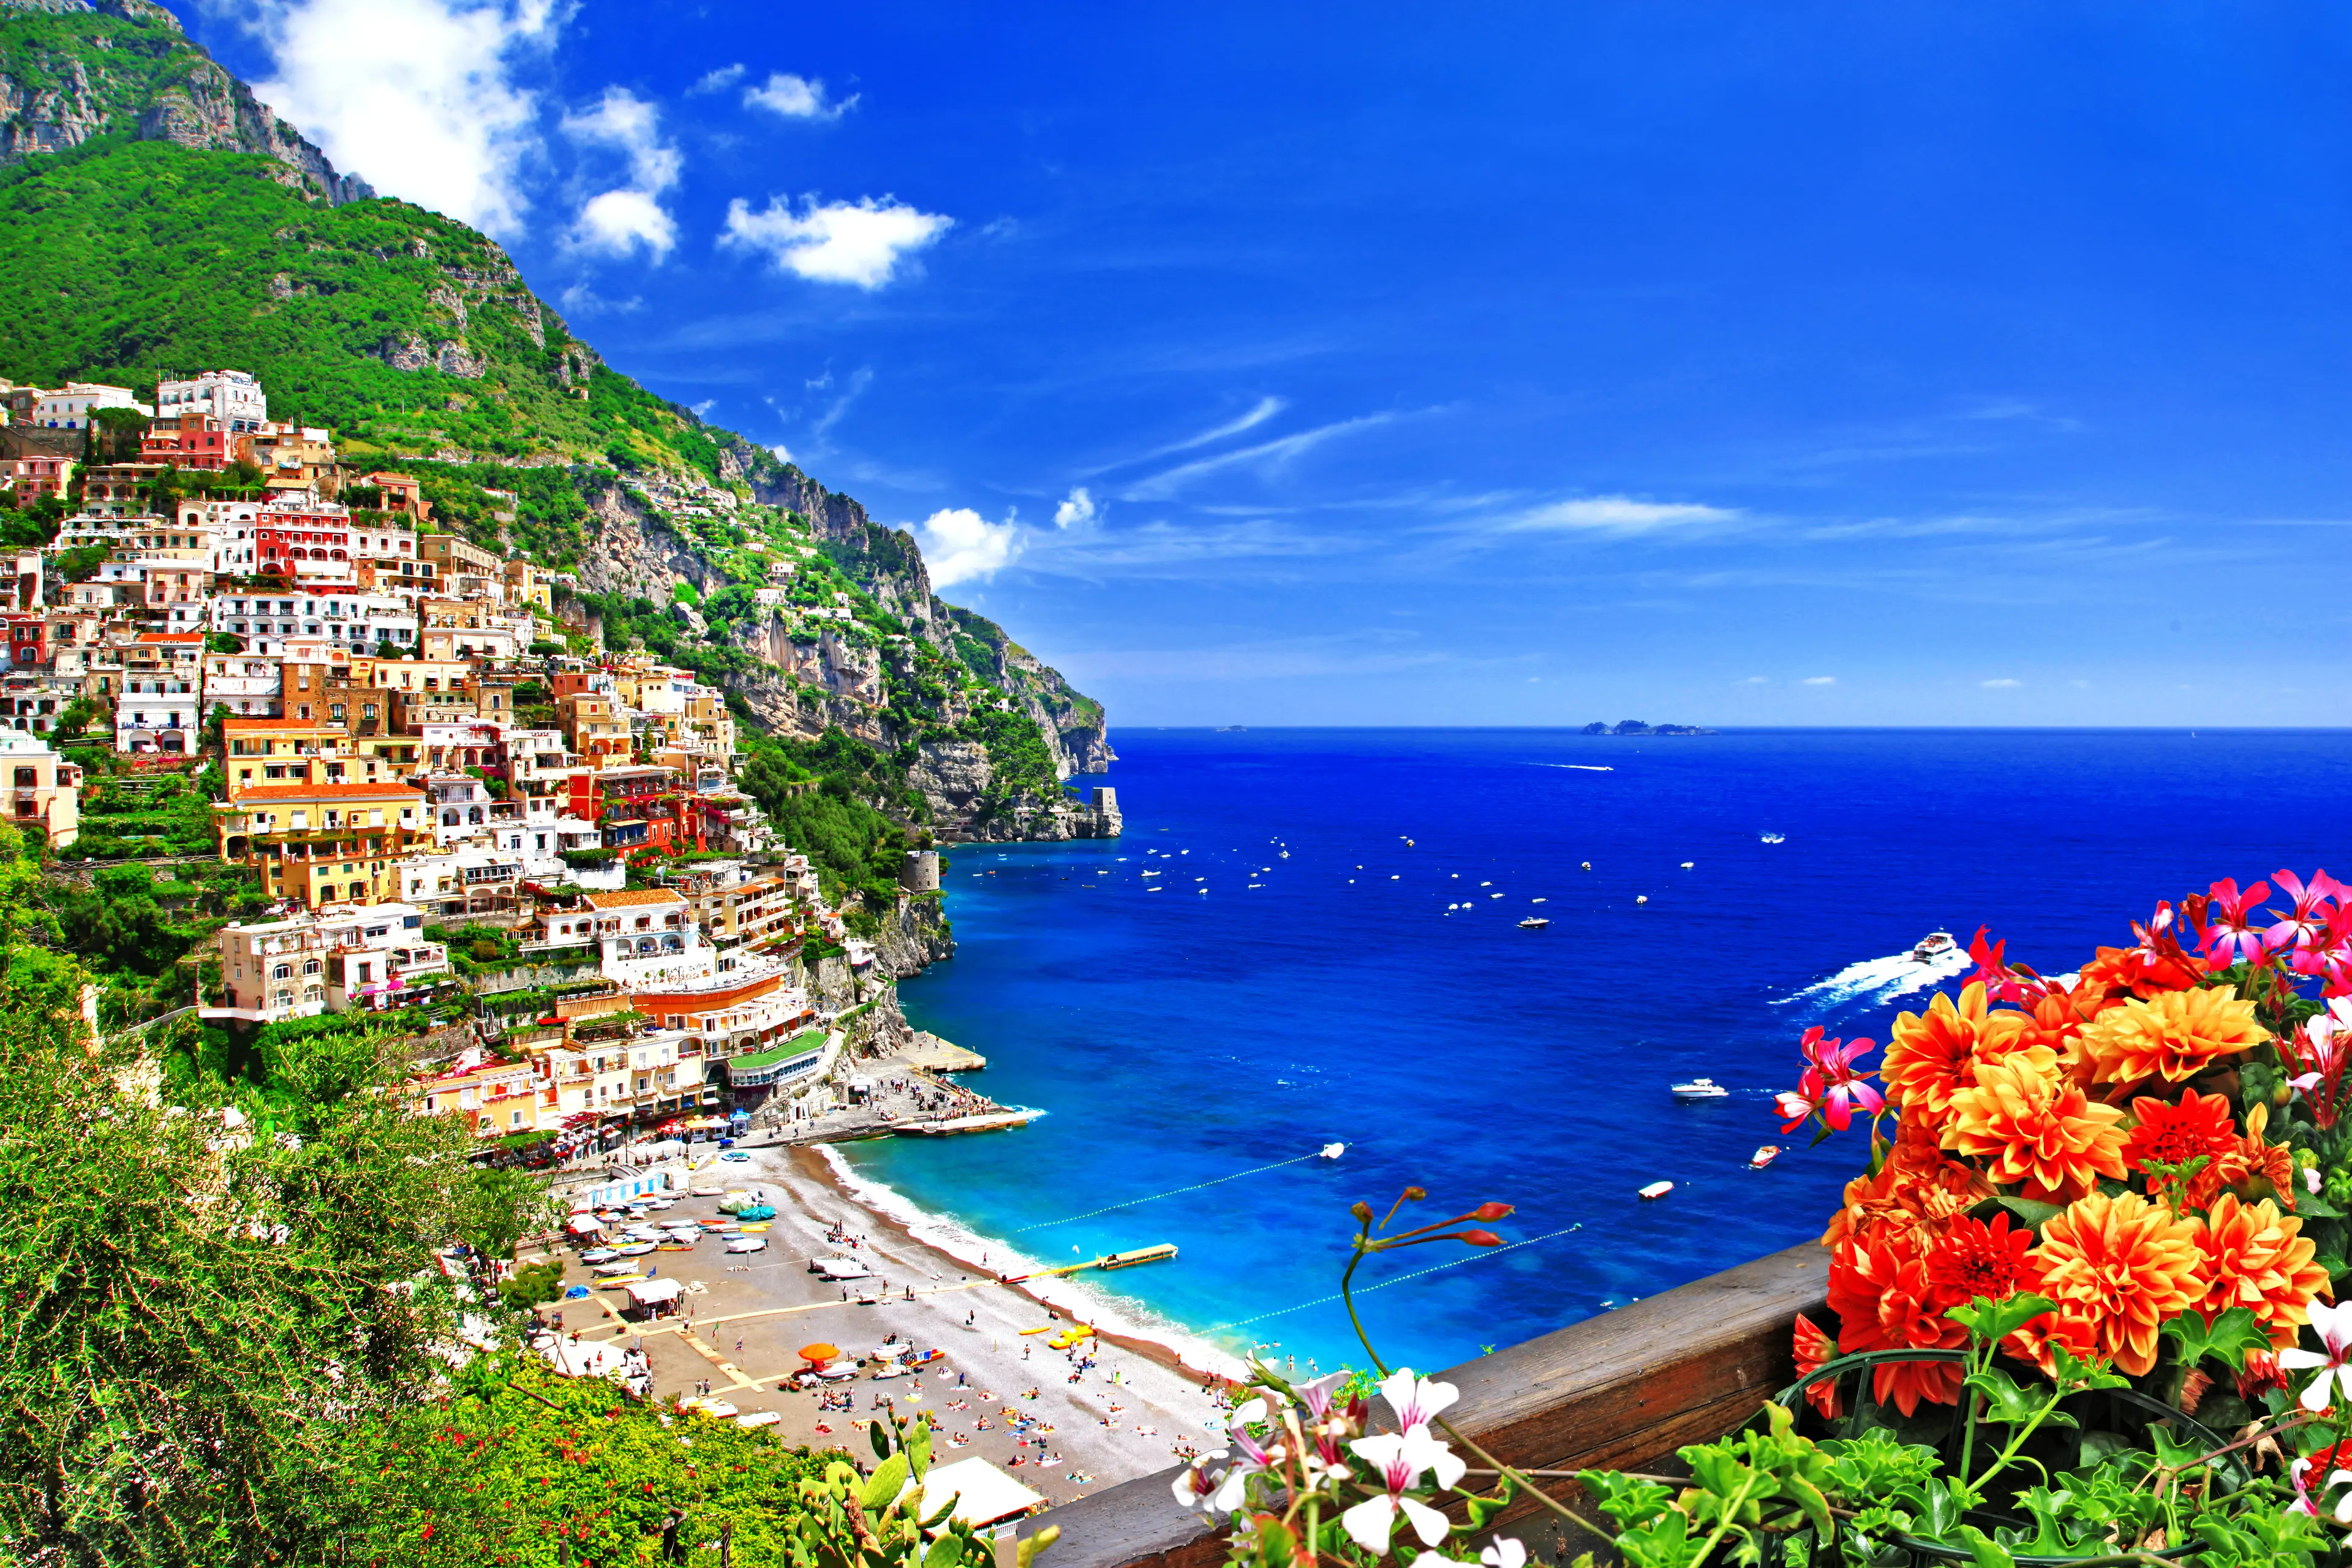 1-Day Sightseeing Adventure Exploring Amalfi Coast, Italy